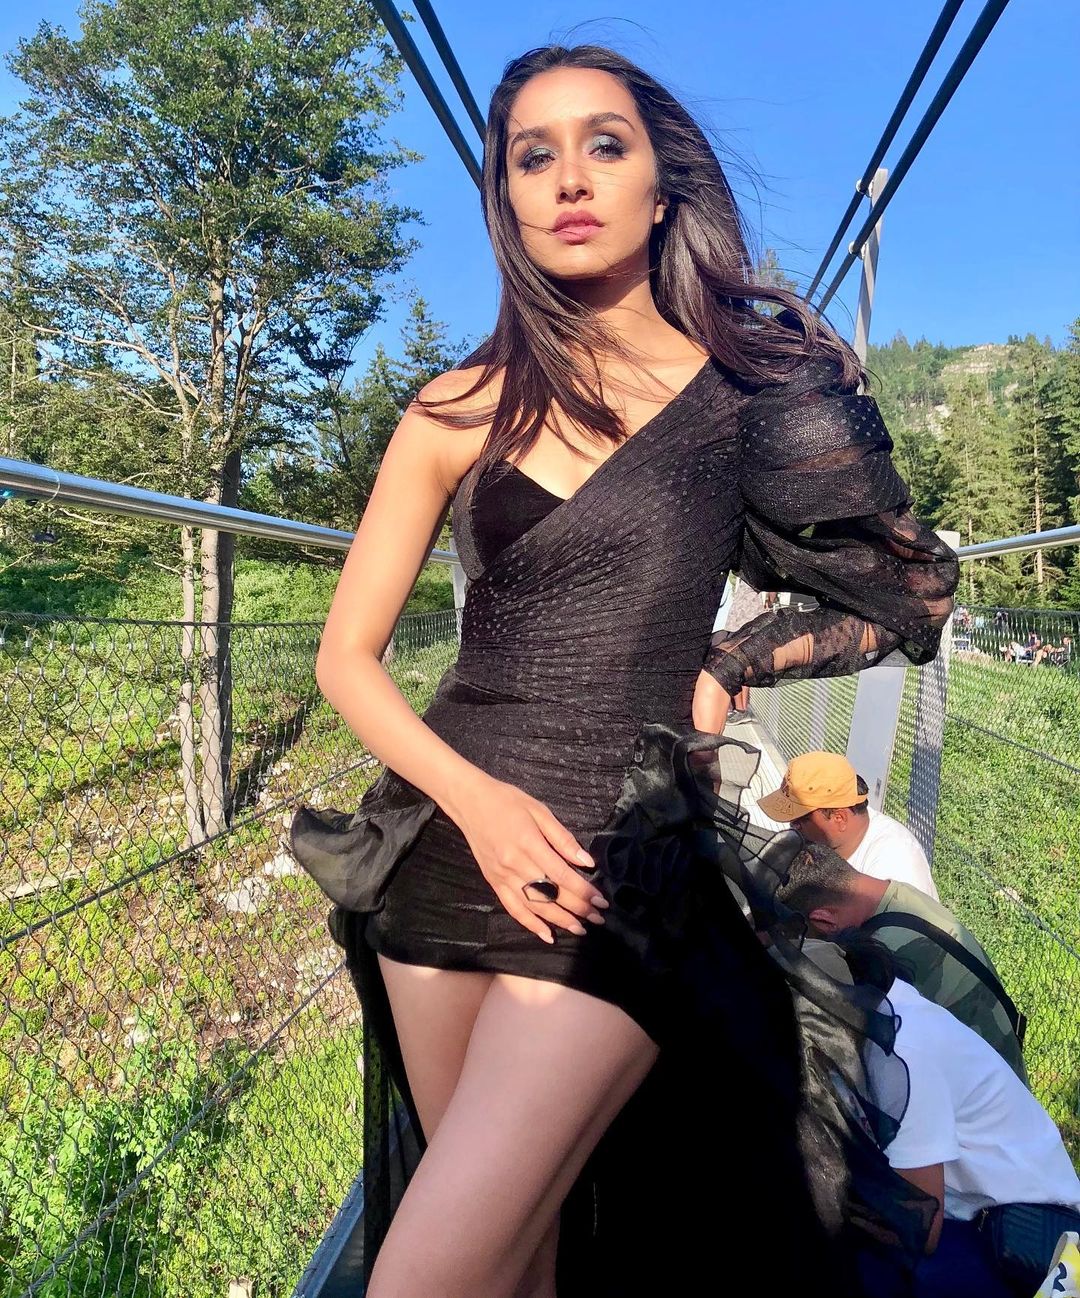 Sex Shraddha Kapoor Legs - Shraddha Kapoor in Black outfits